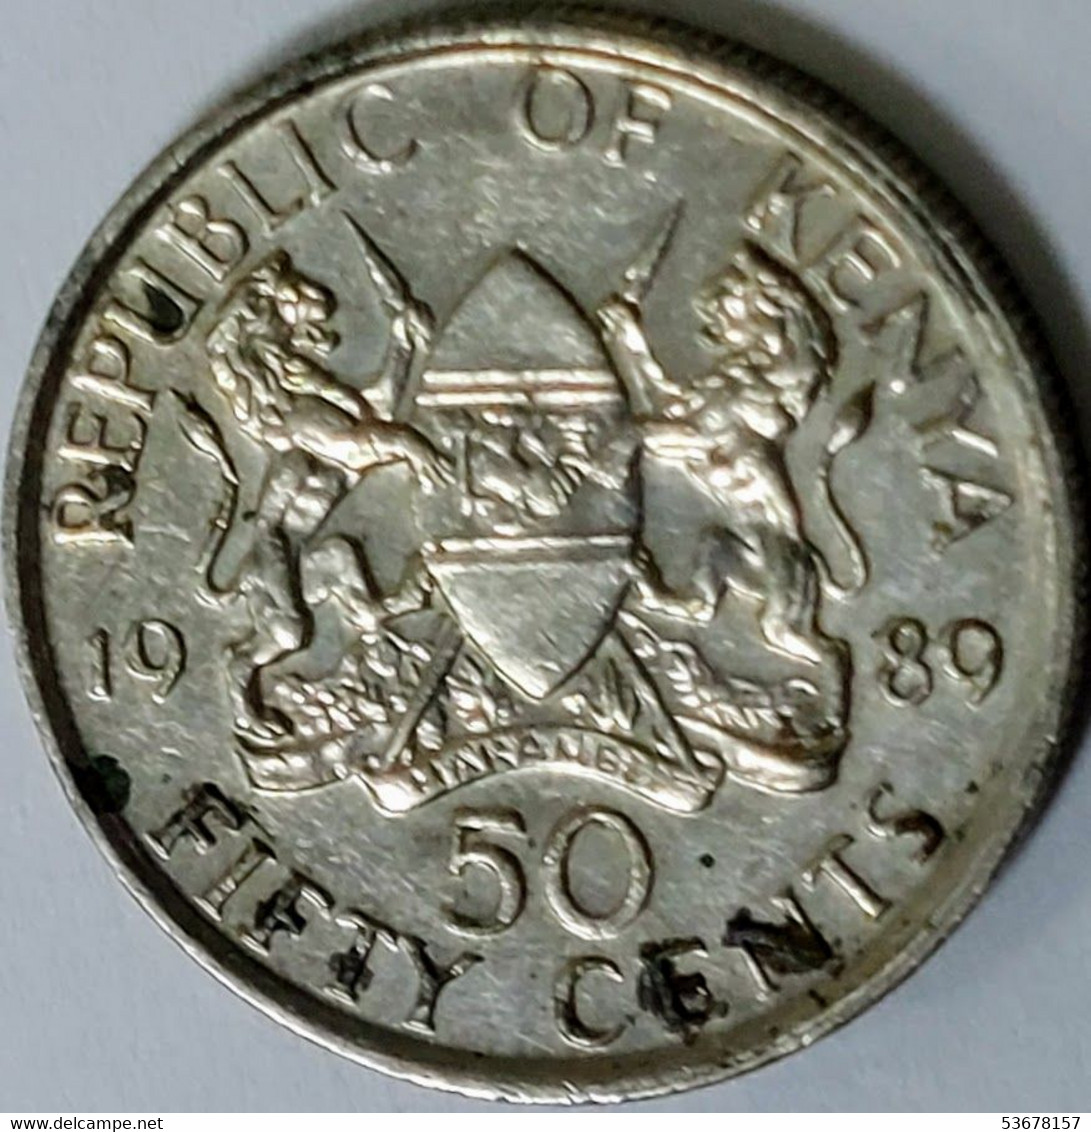 Kenya - 50 Cents 1989, KM# 19 (#1322)